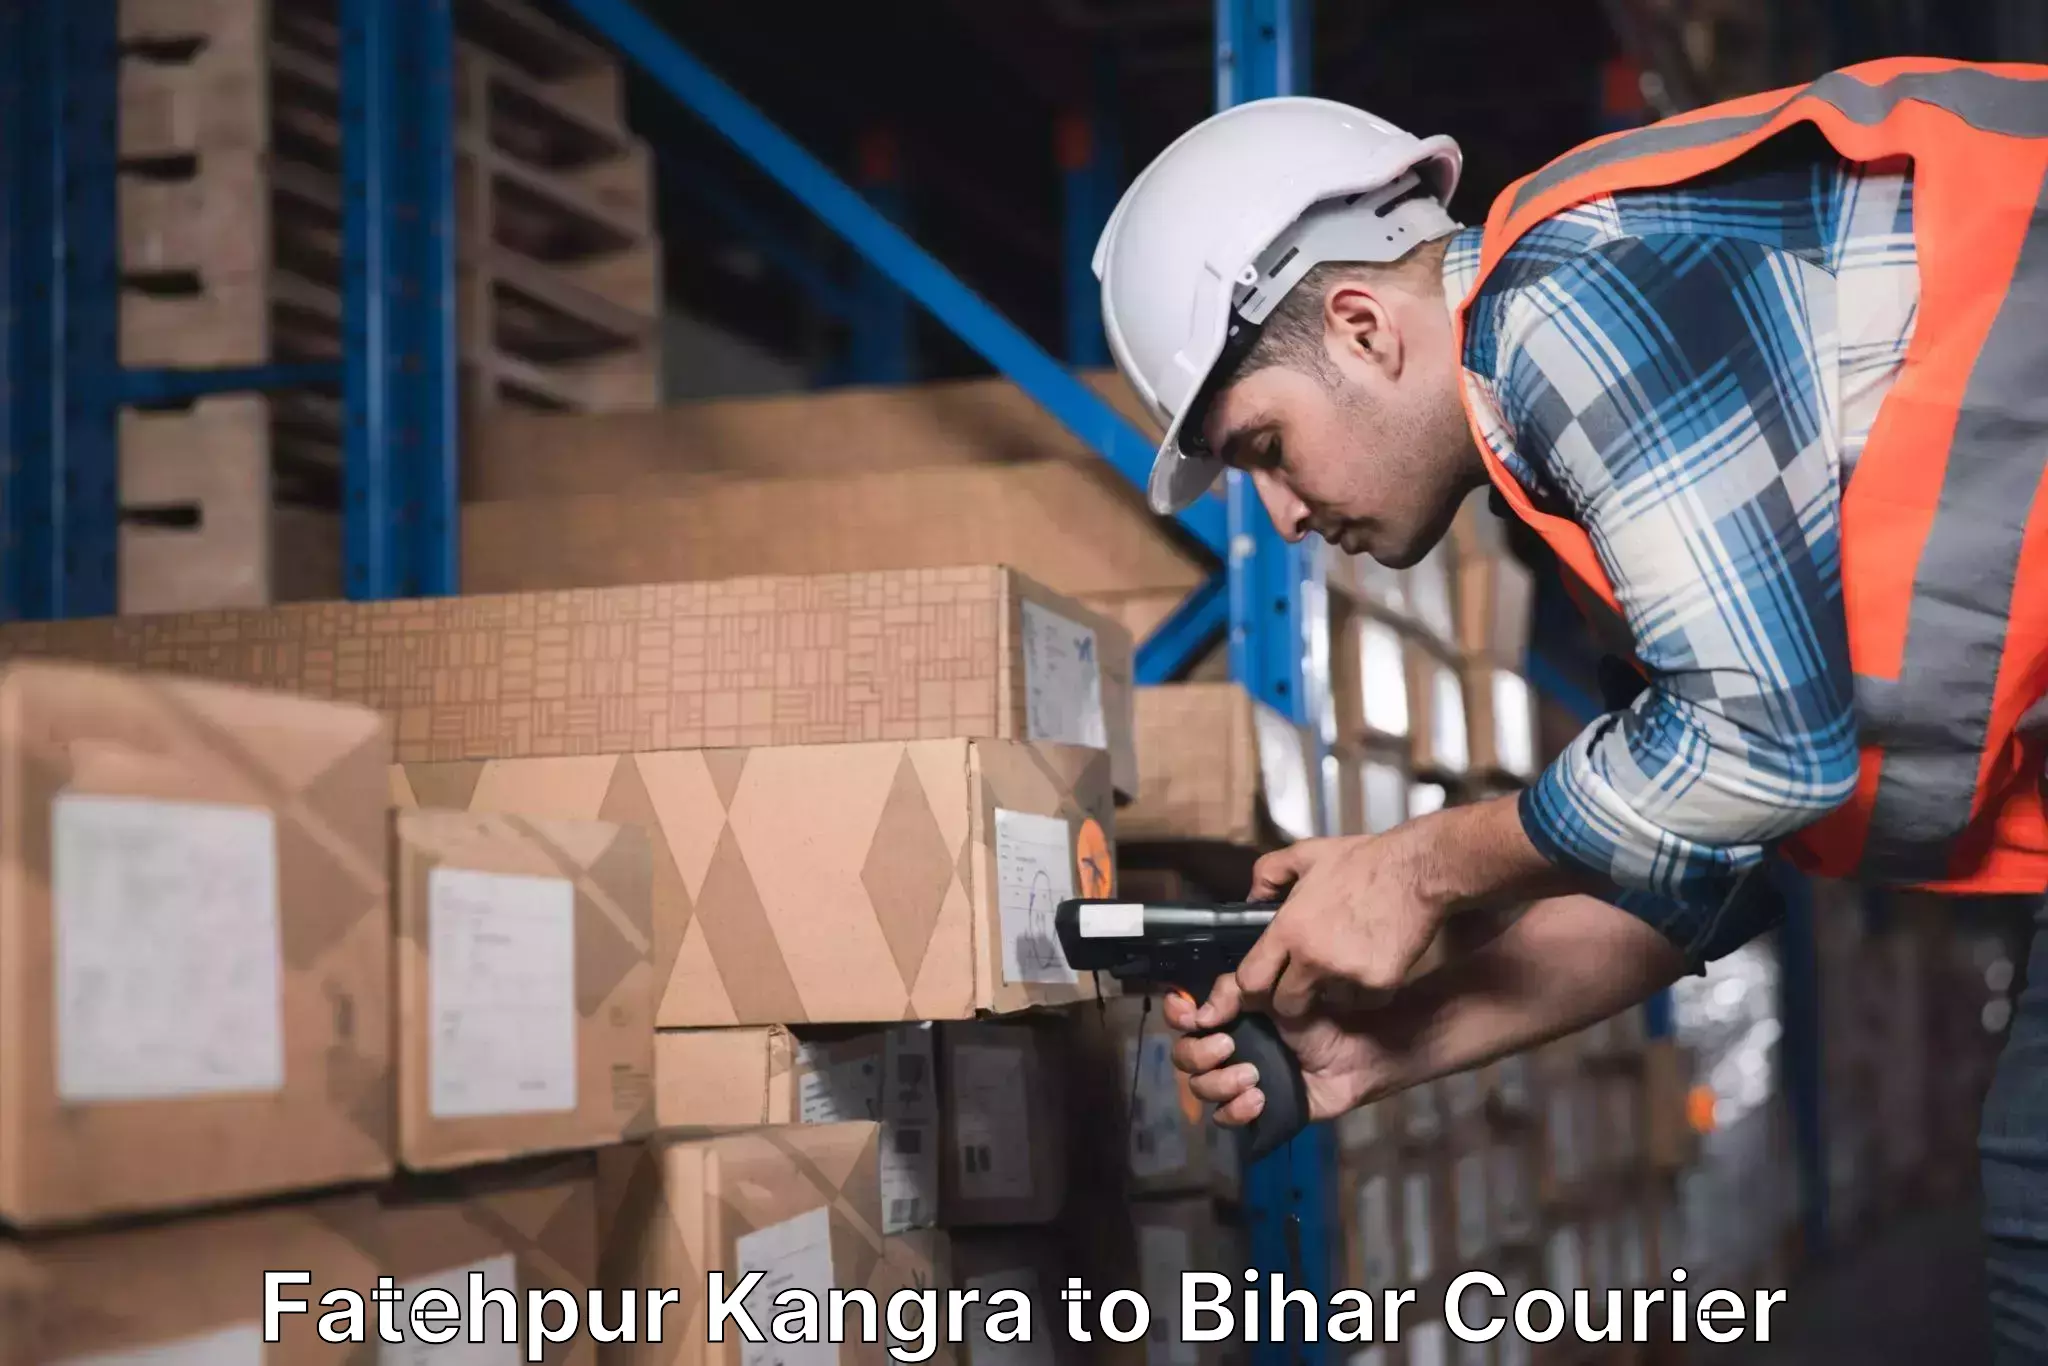 Courier service comparison Fatehpur Kangra to Sheonar